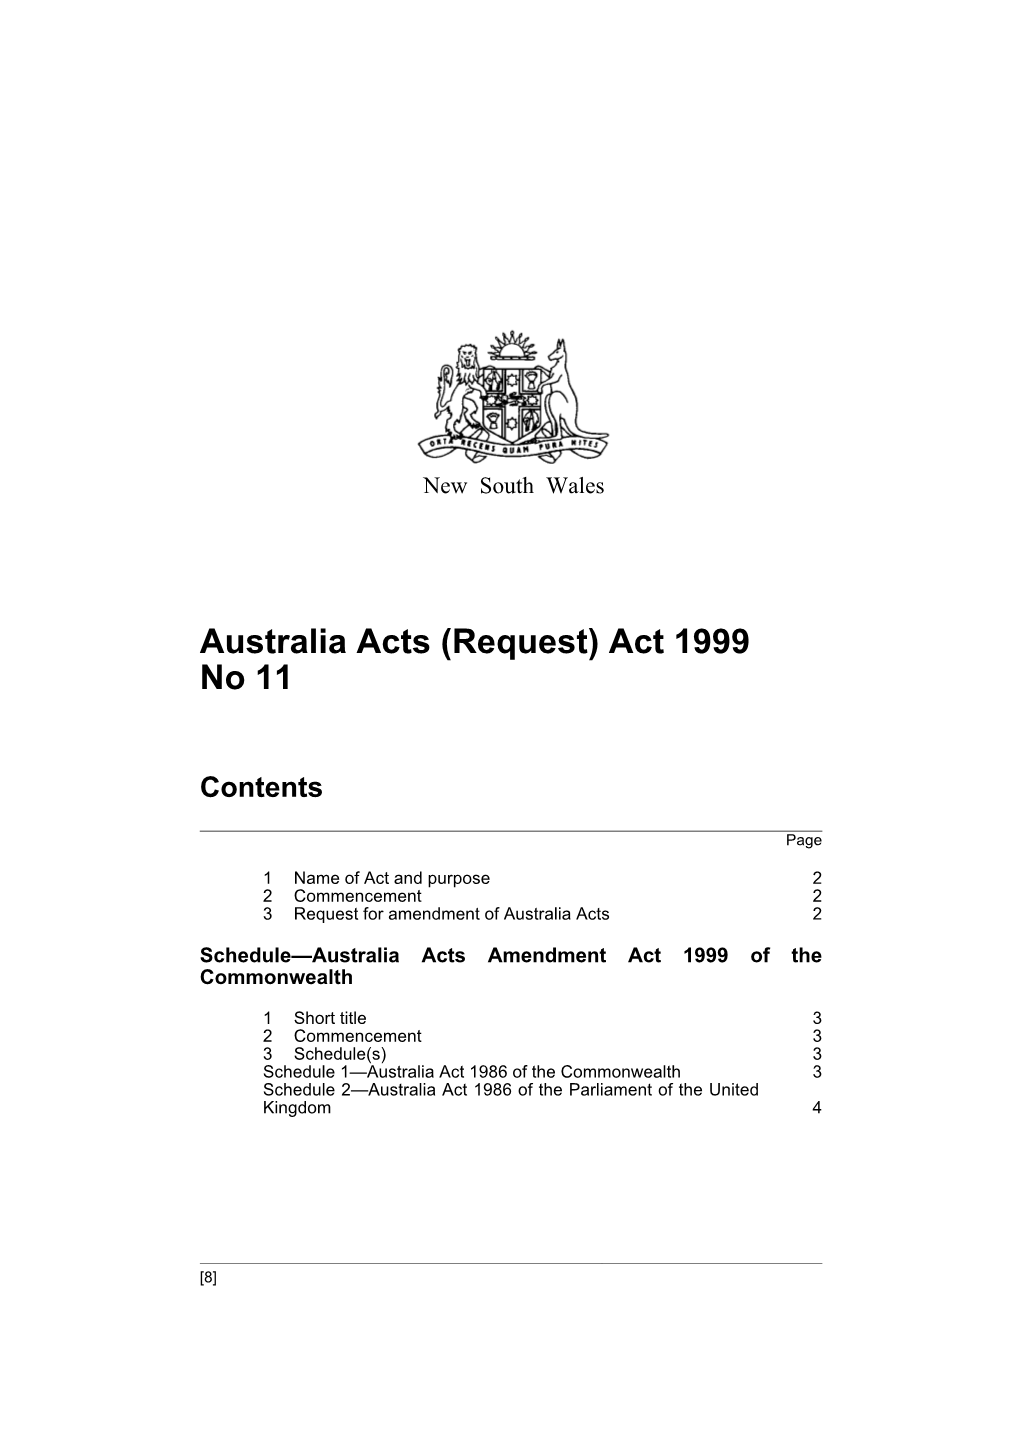 Australia Acts (Request) Act 1999 No 11